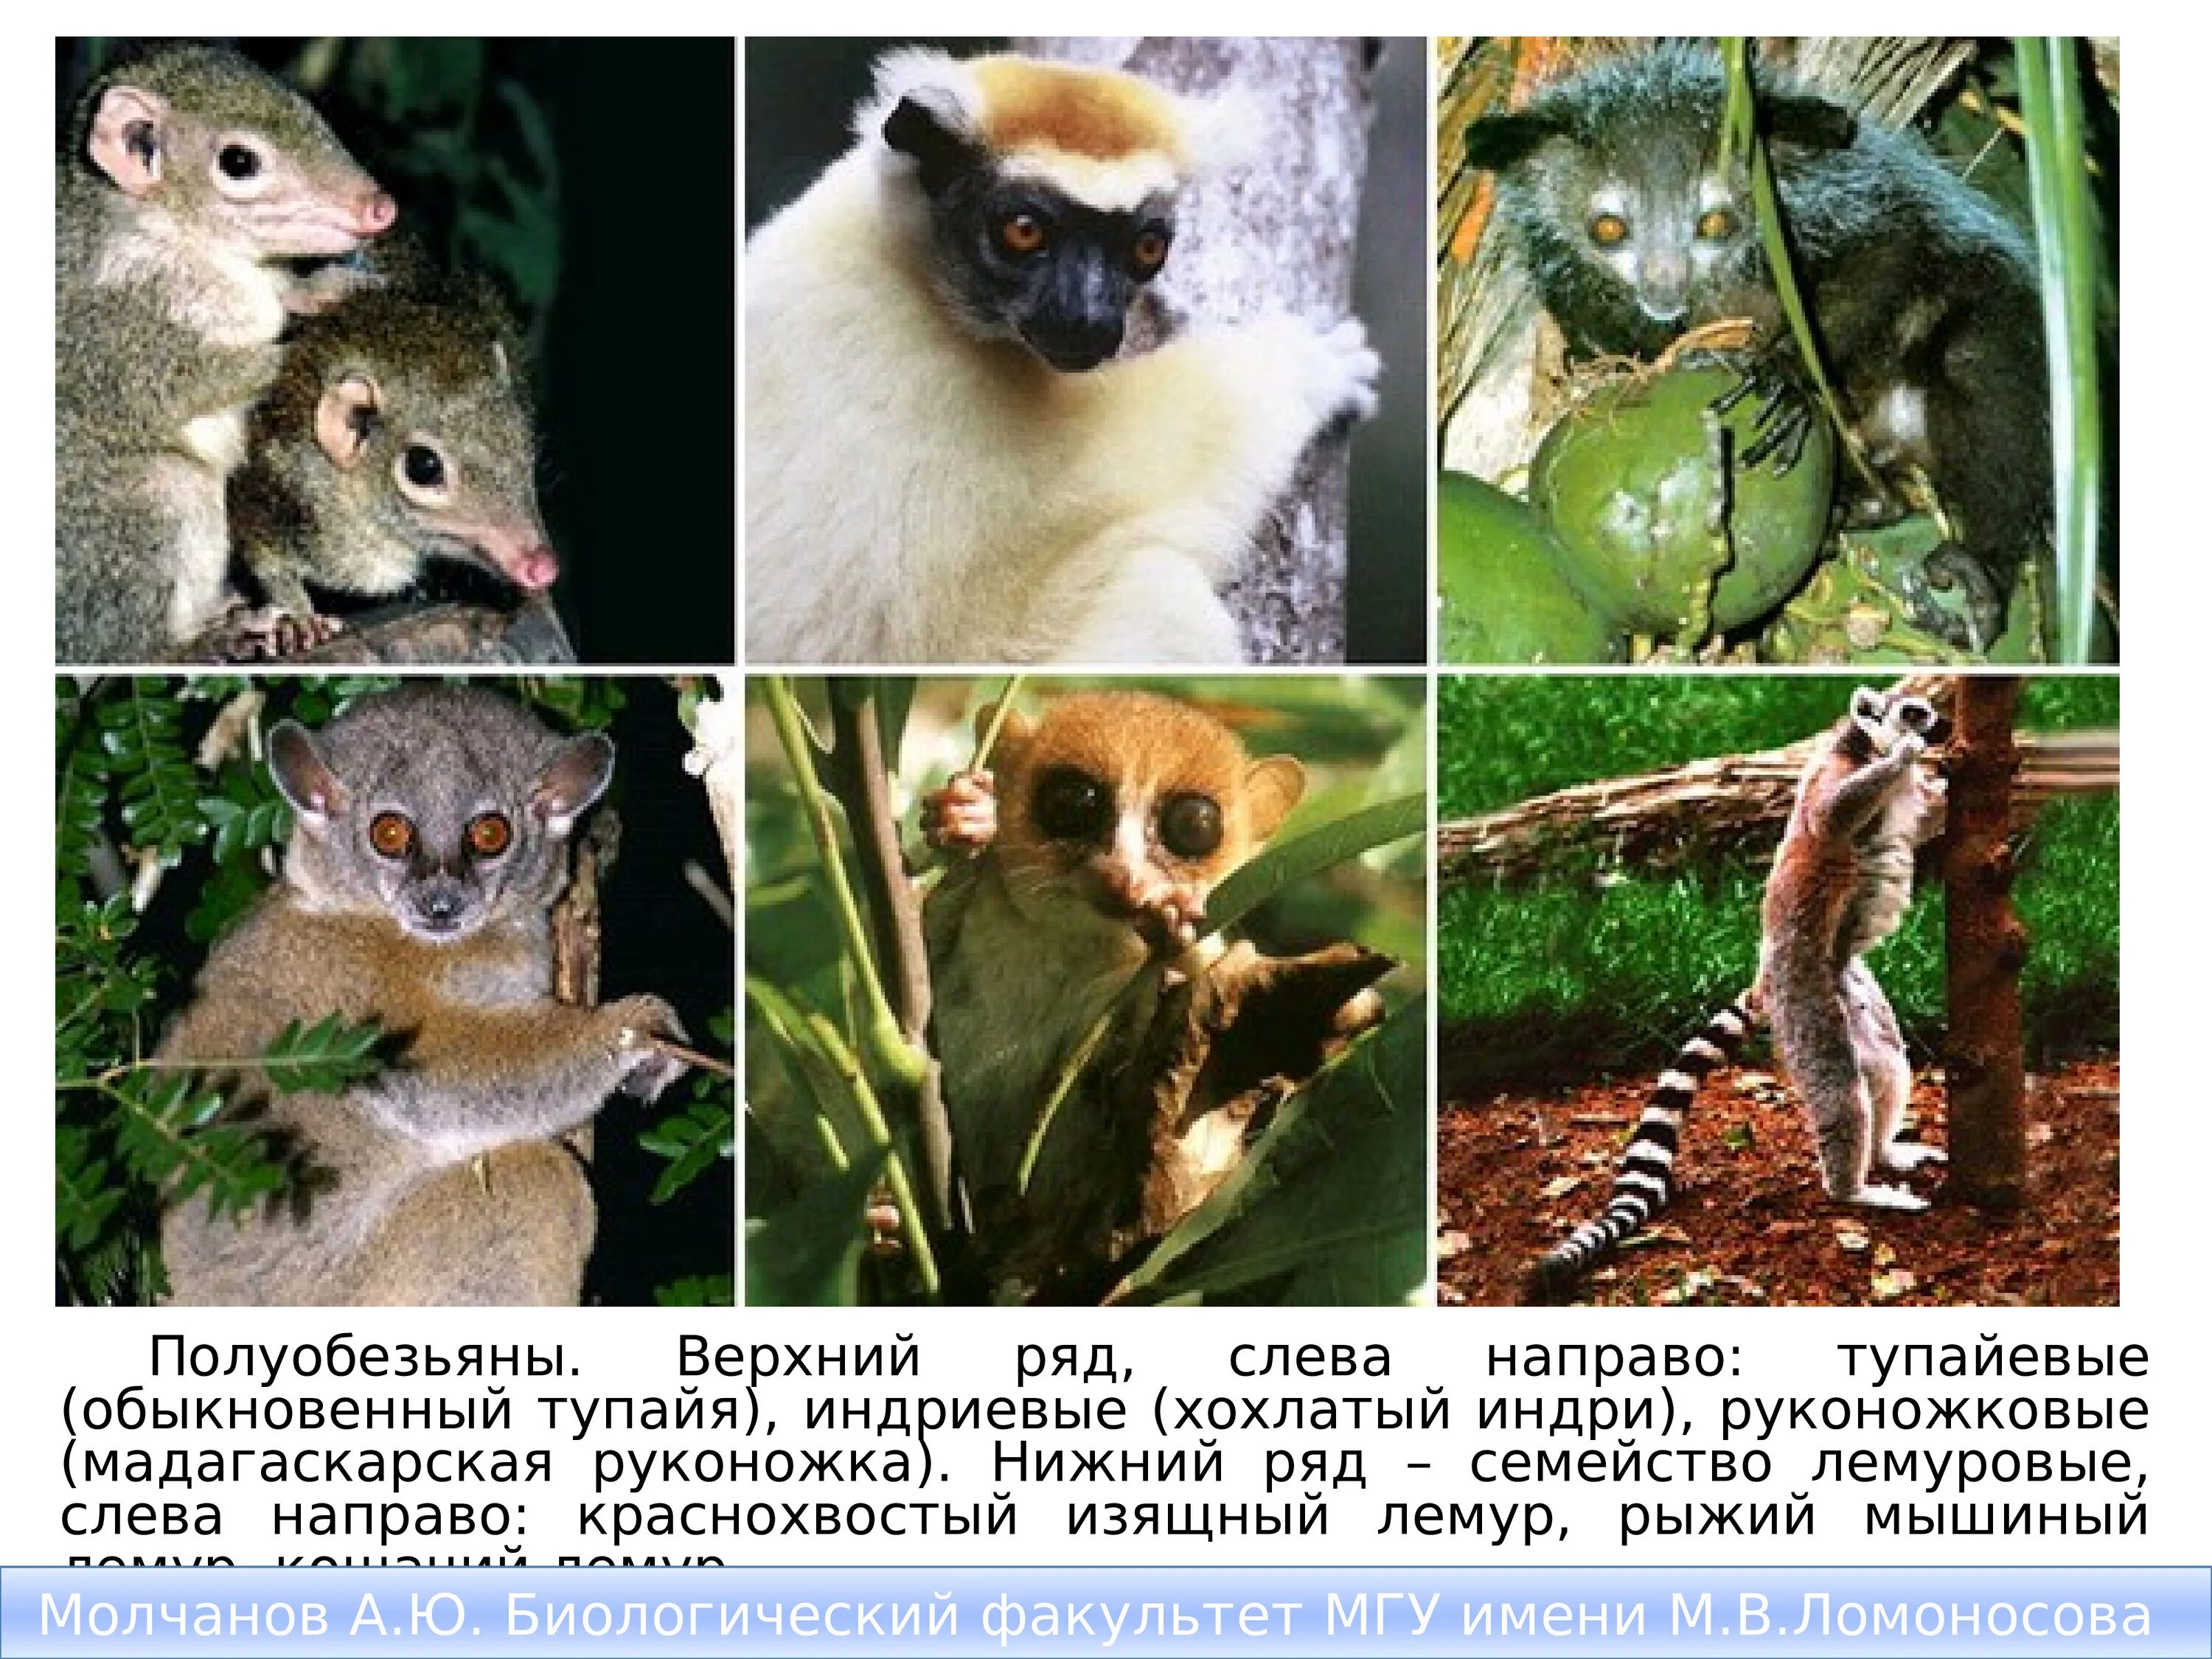 Какой тип развития характерен для лемура. Приматы полуобезьяны. Отряд приматы полуобезьяны. Подотряд низшие приматы полуобезьяны. Полуобезьяны лемуры.